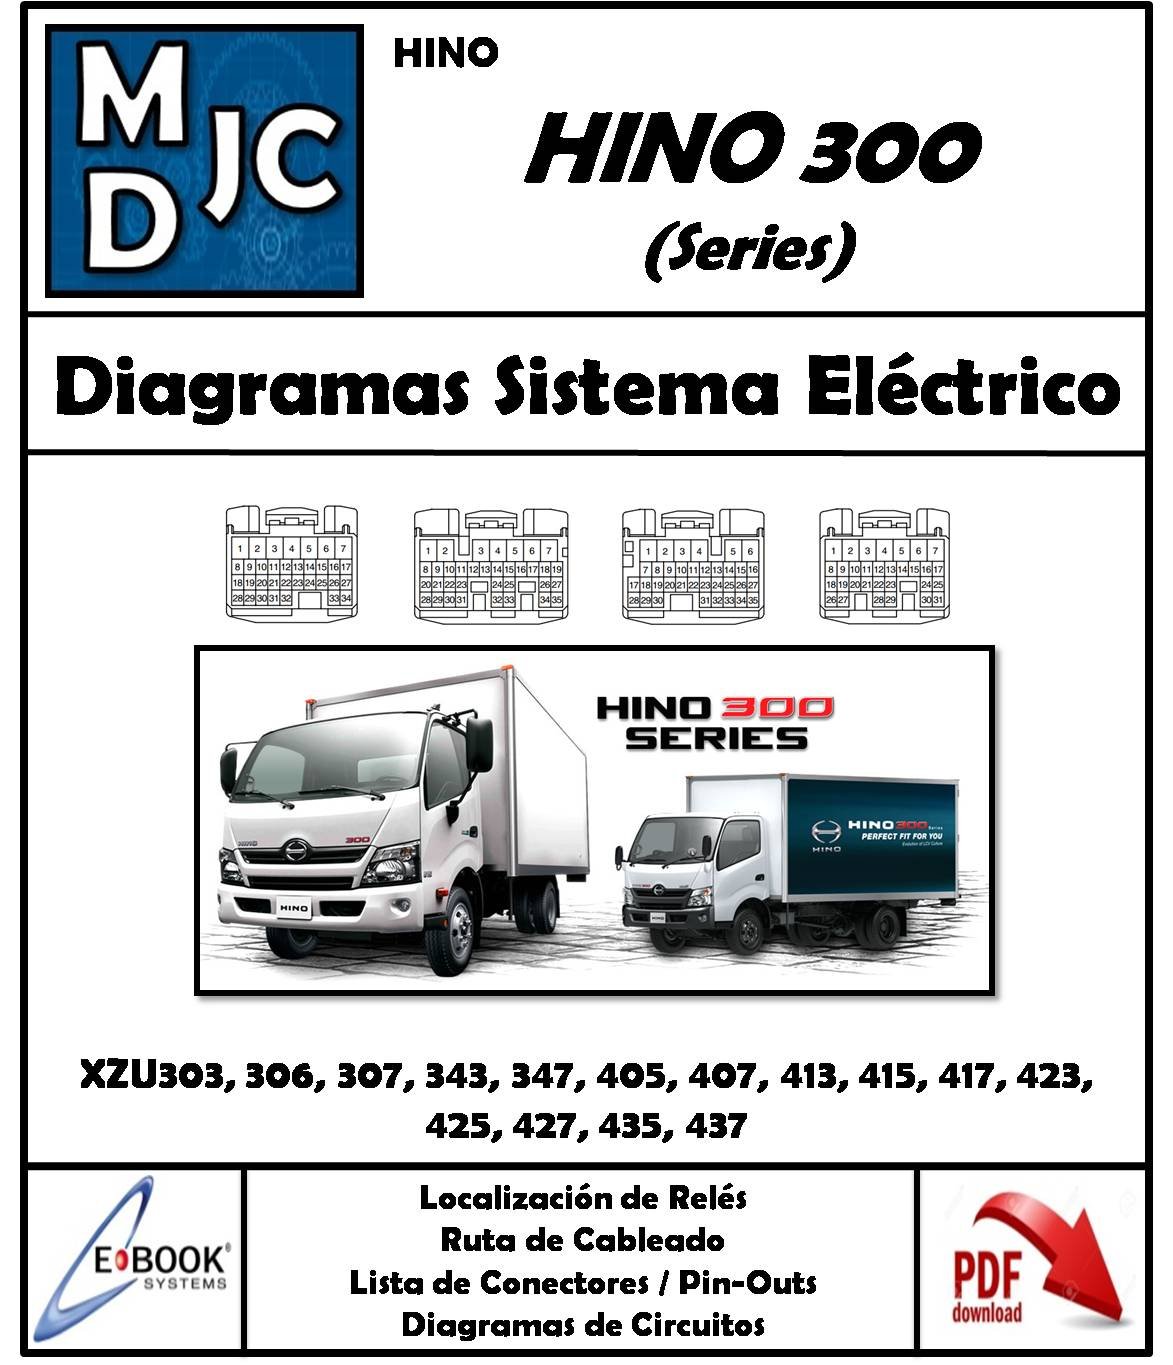 Manual Diagramas Sistema Electrico Hino 300 Series 300 / 400 | MDJC -  MANUALES DE TALLER